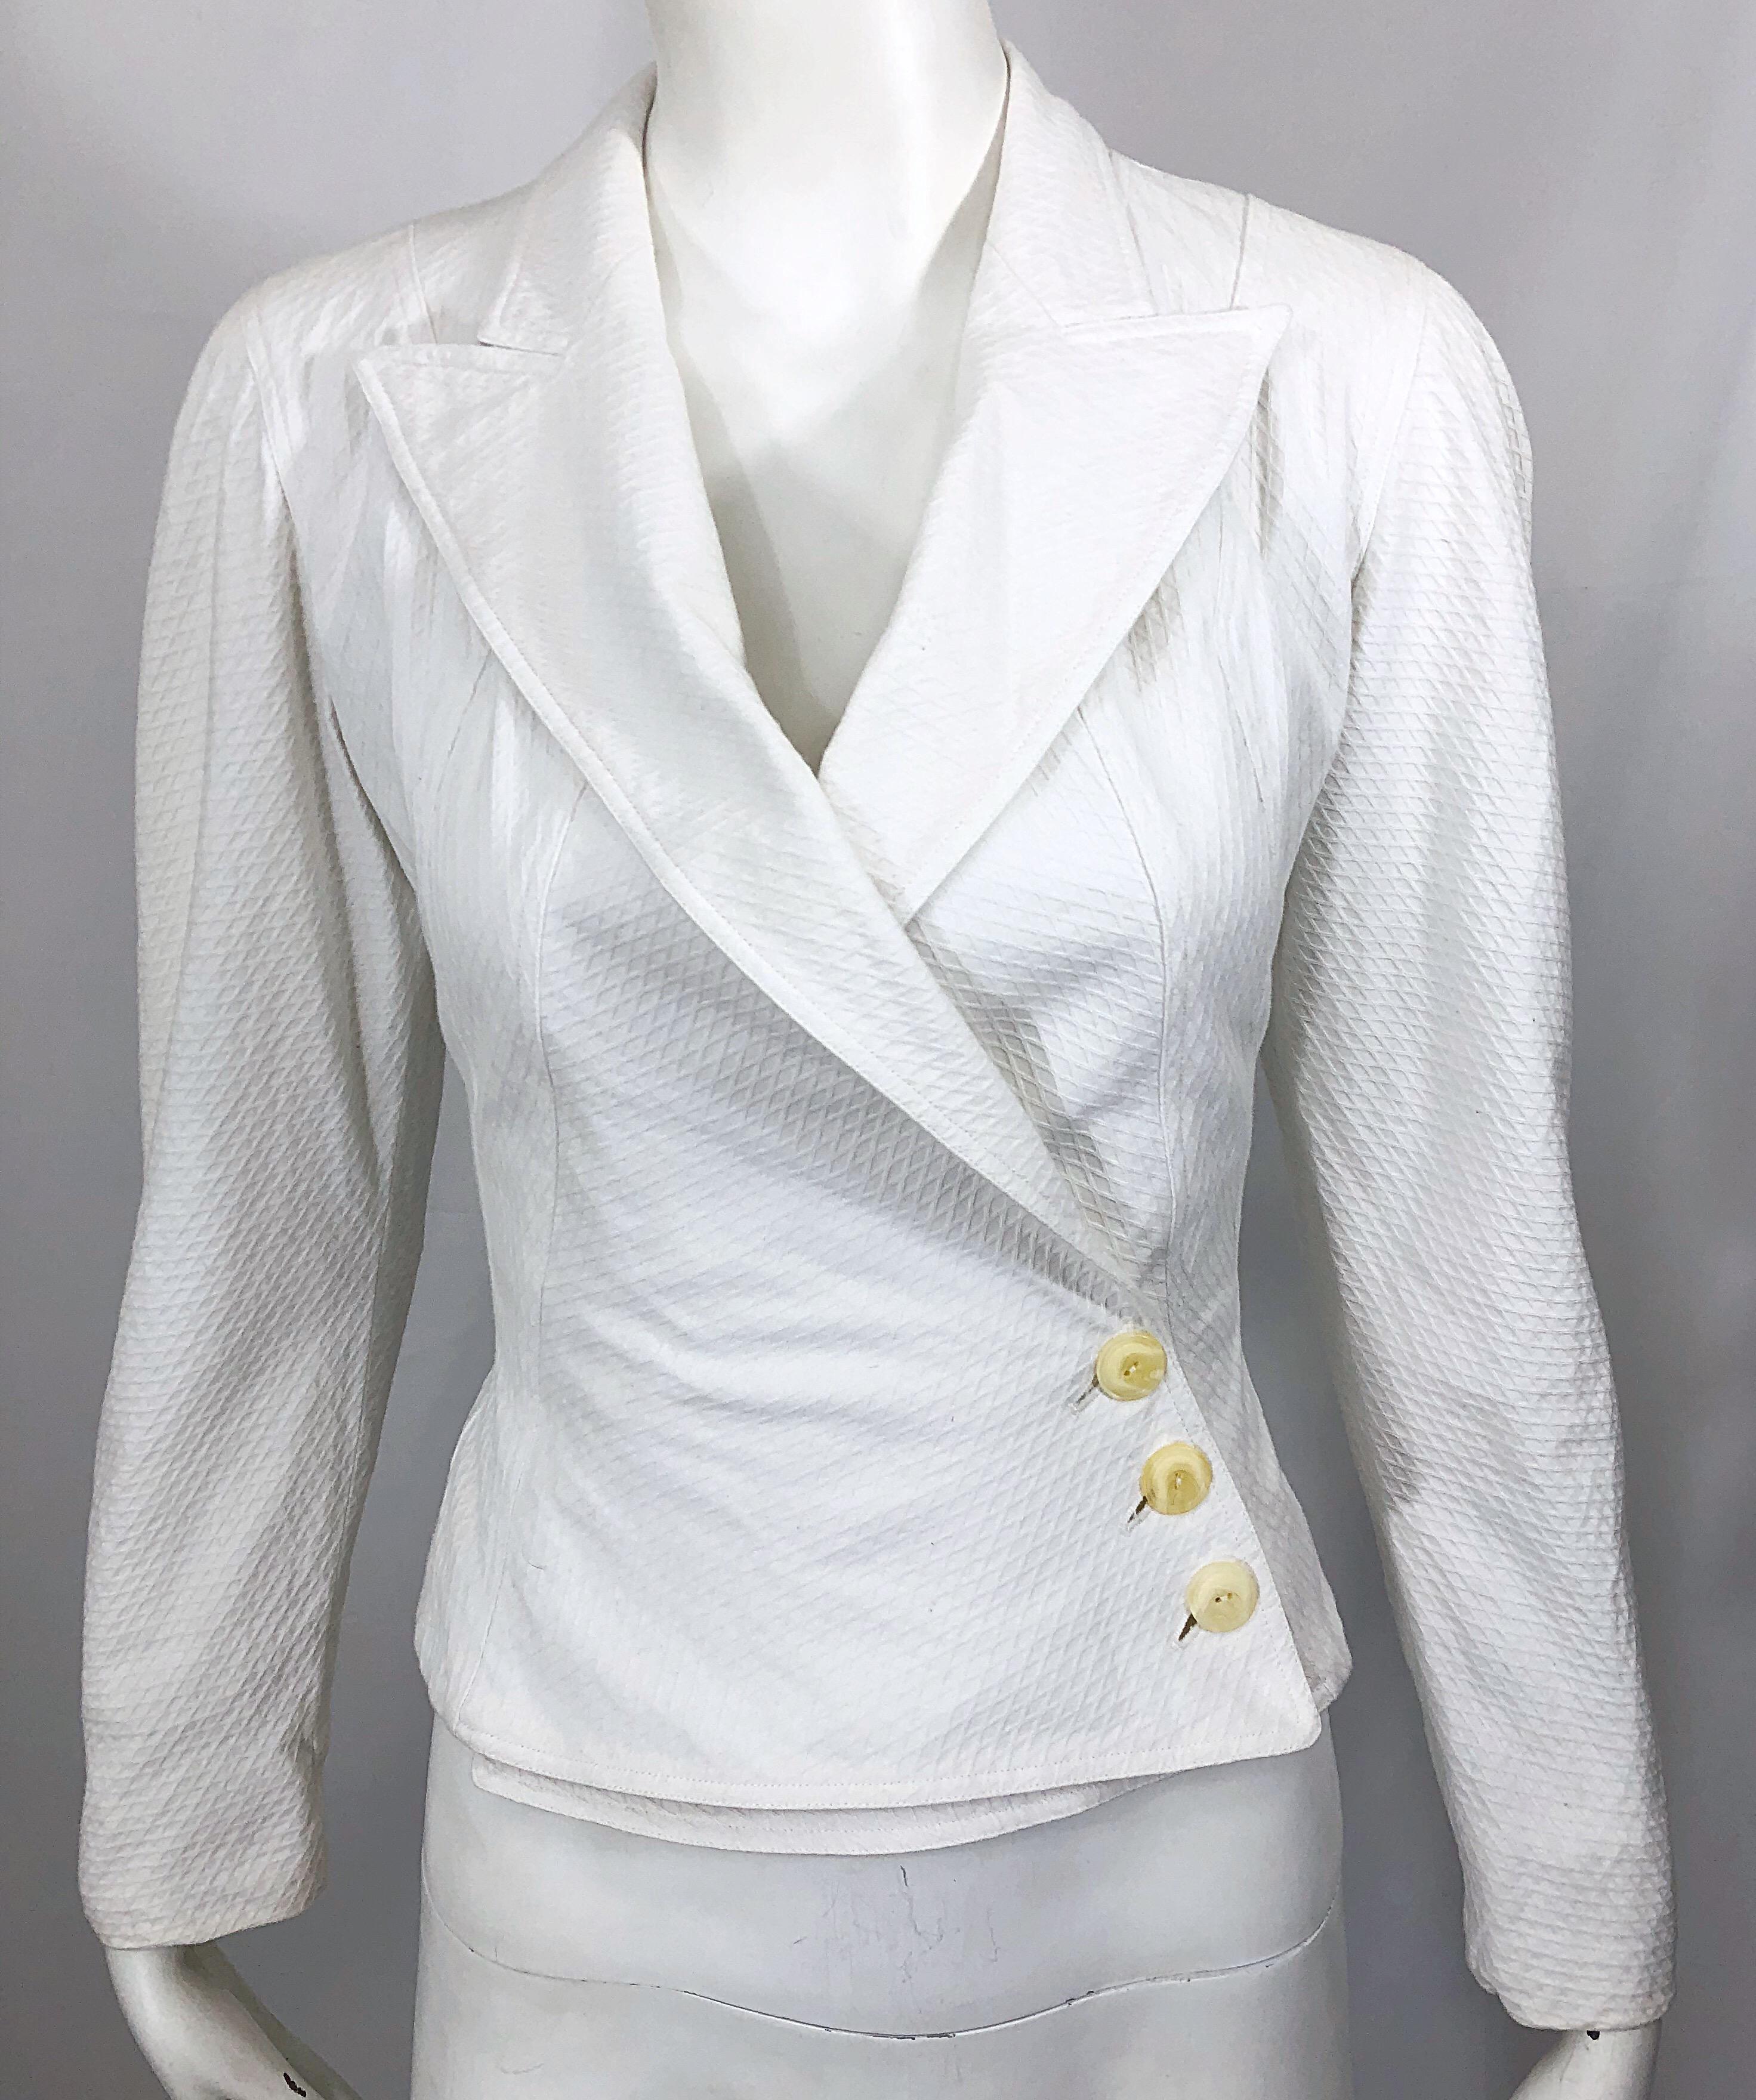 1980s Azzedine Alaia White Pique Cotton Vintage 80s Cropped Blazer Jacket Size 2 For Sale 1